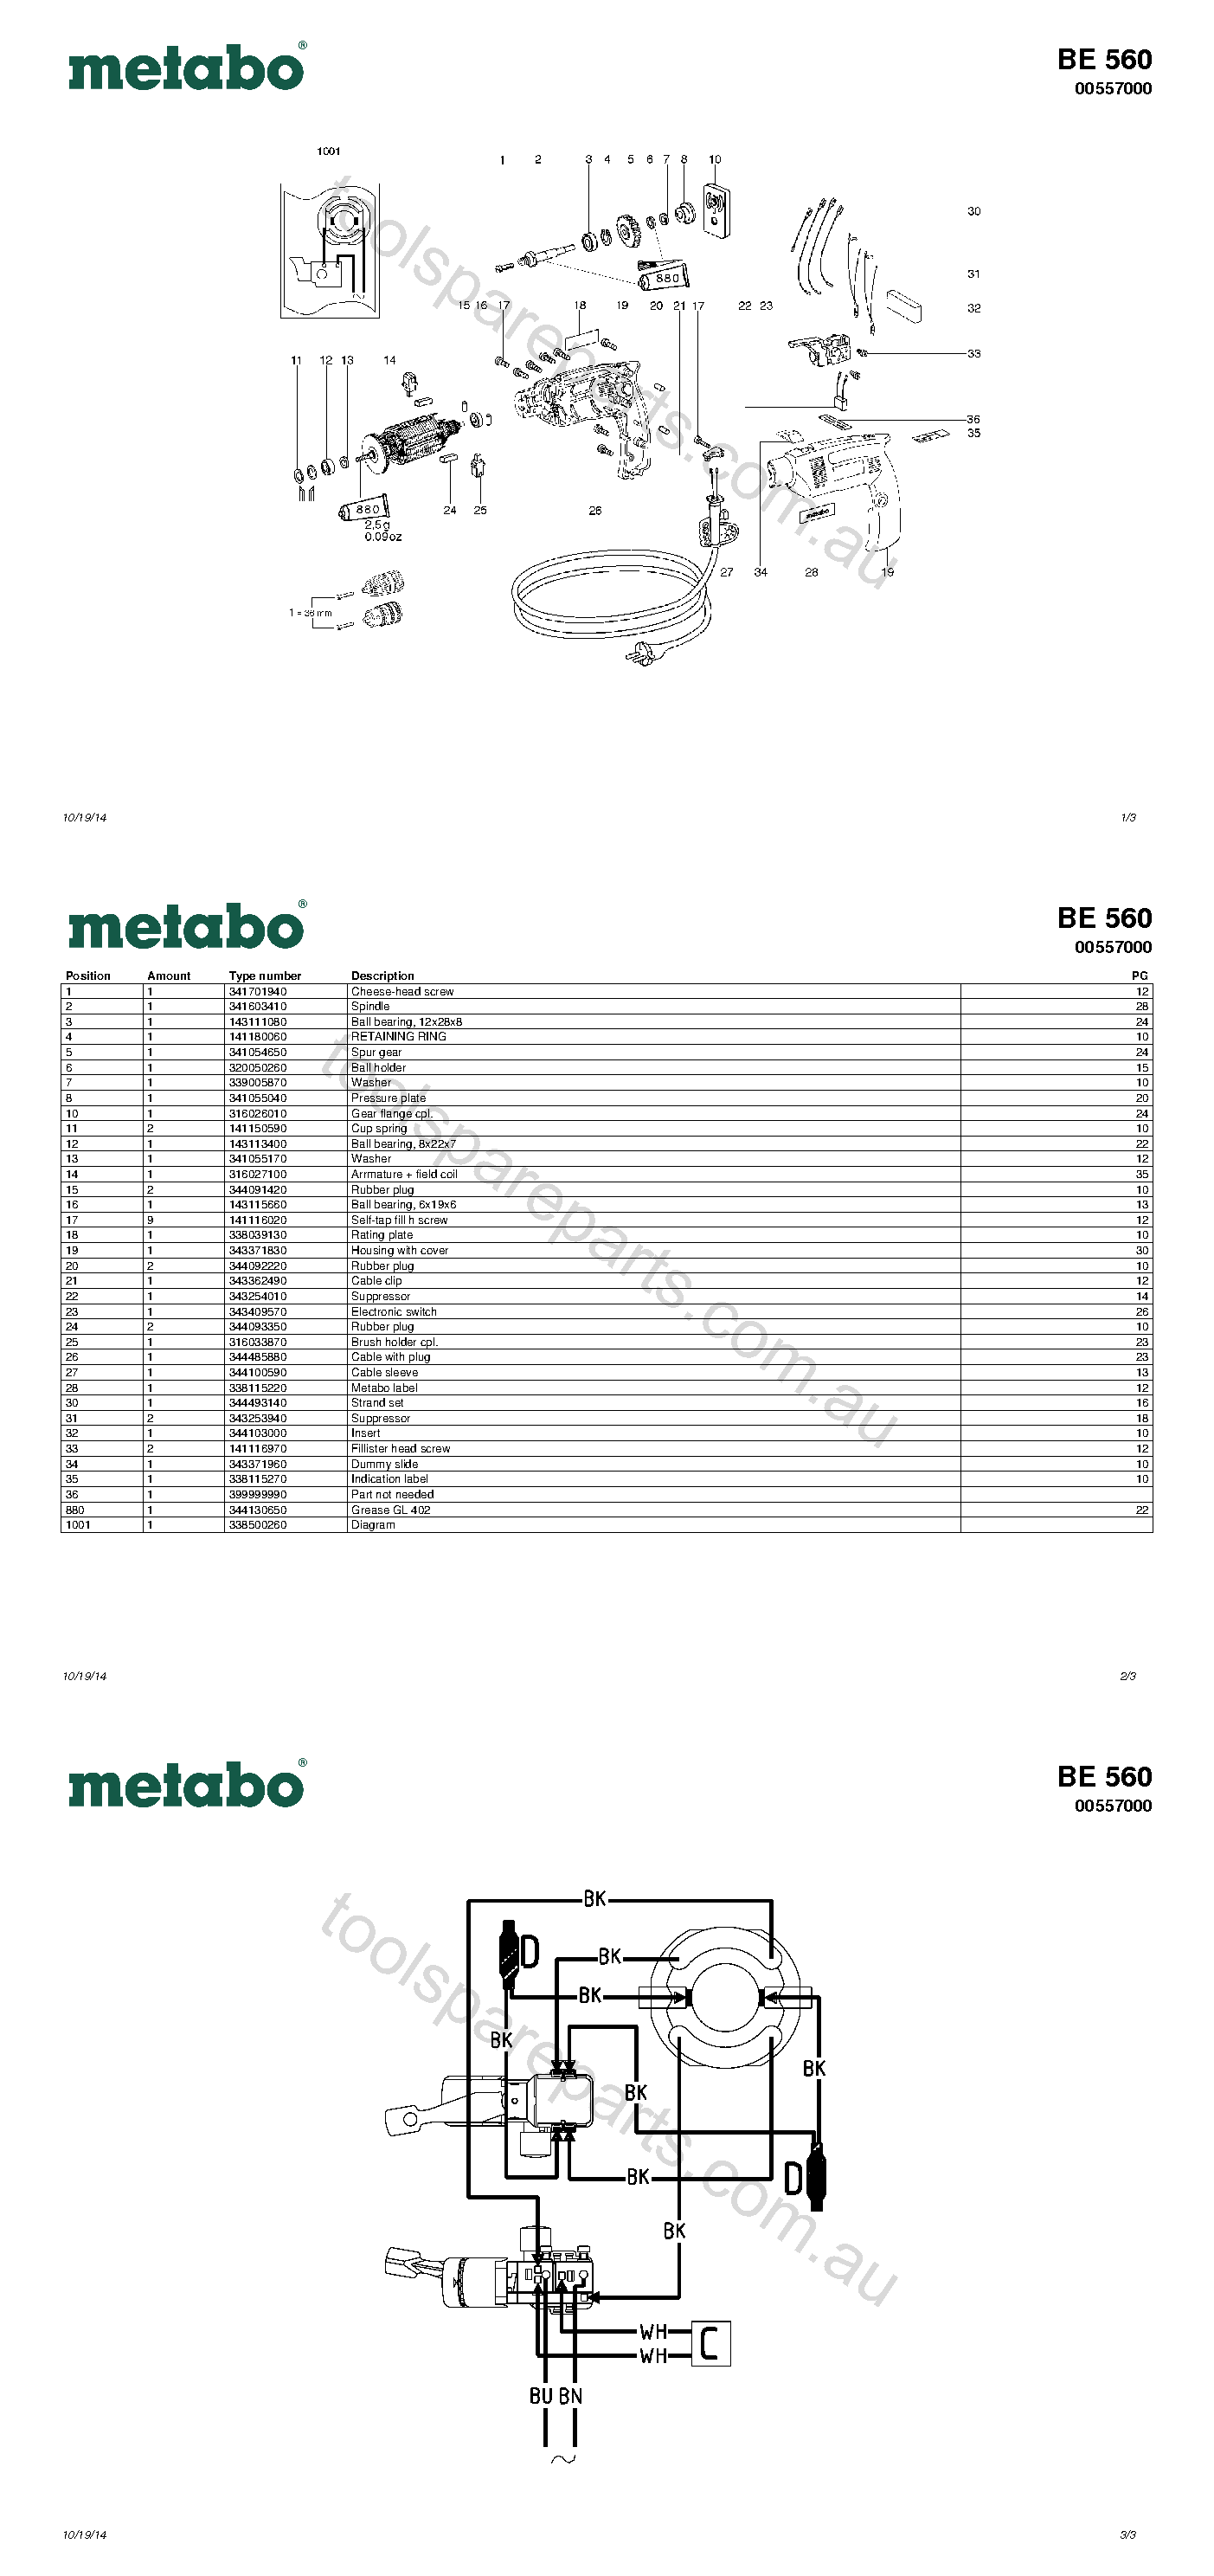 Metabo BE 560 00557000  Diagram 1